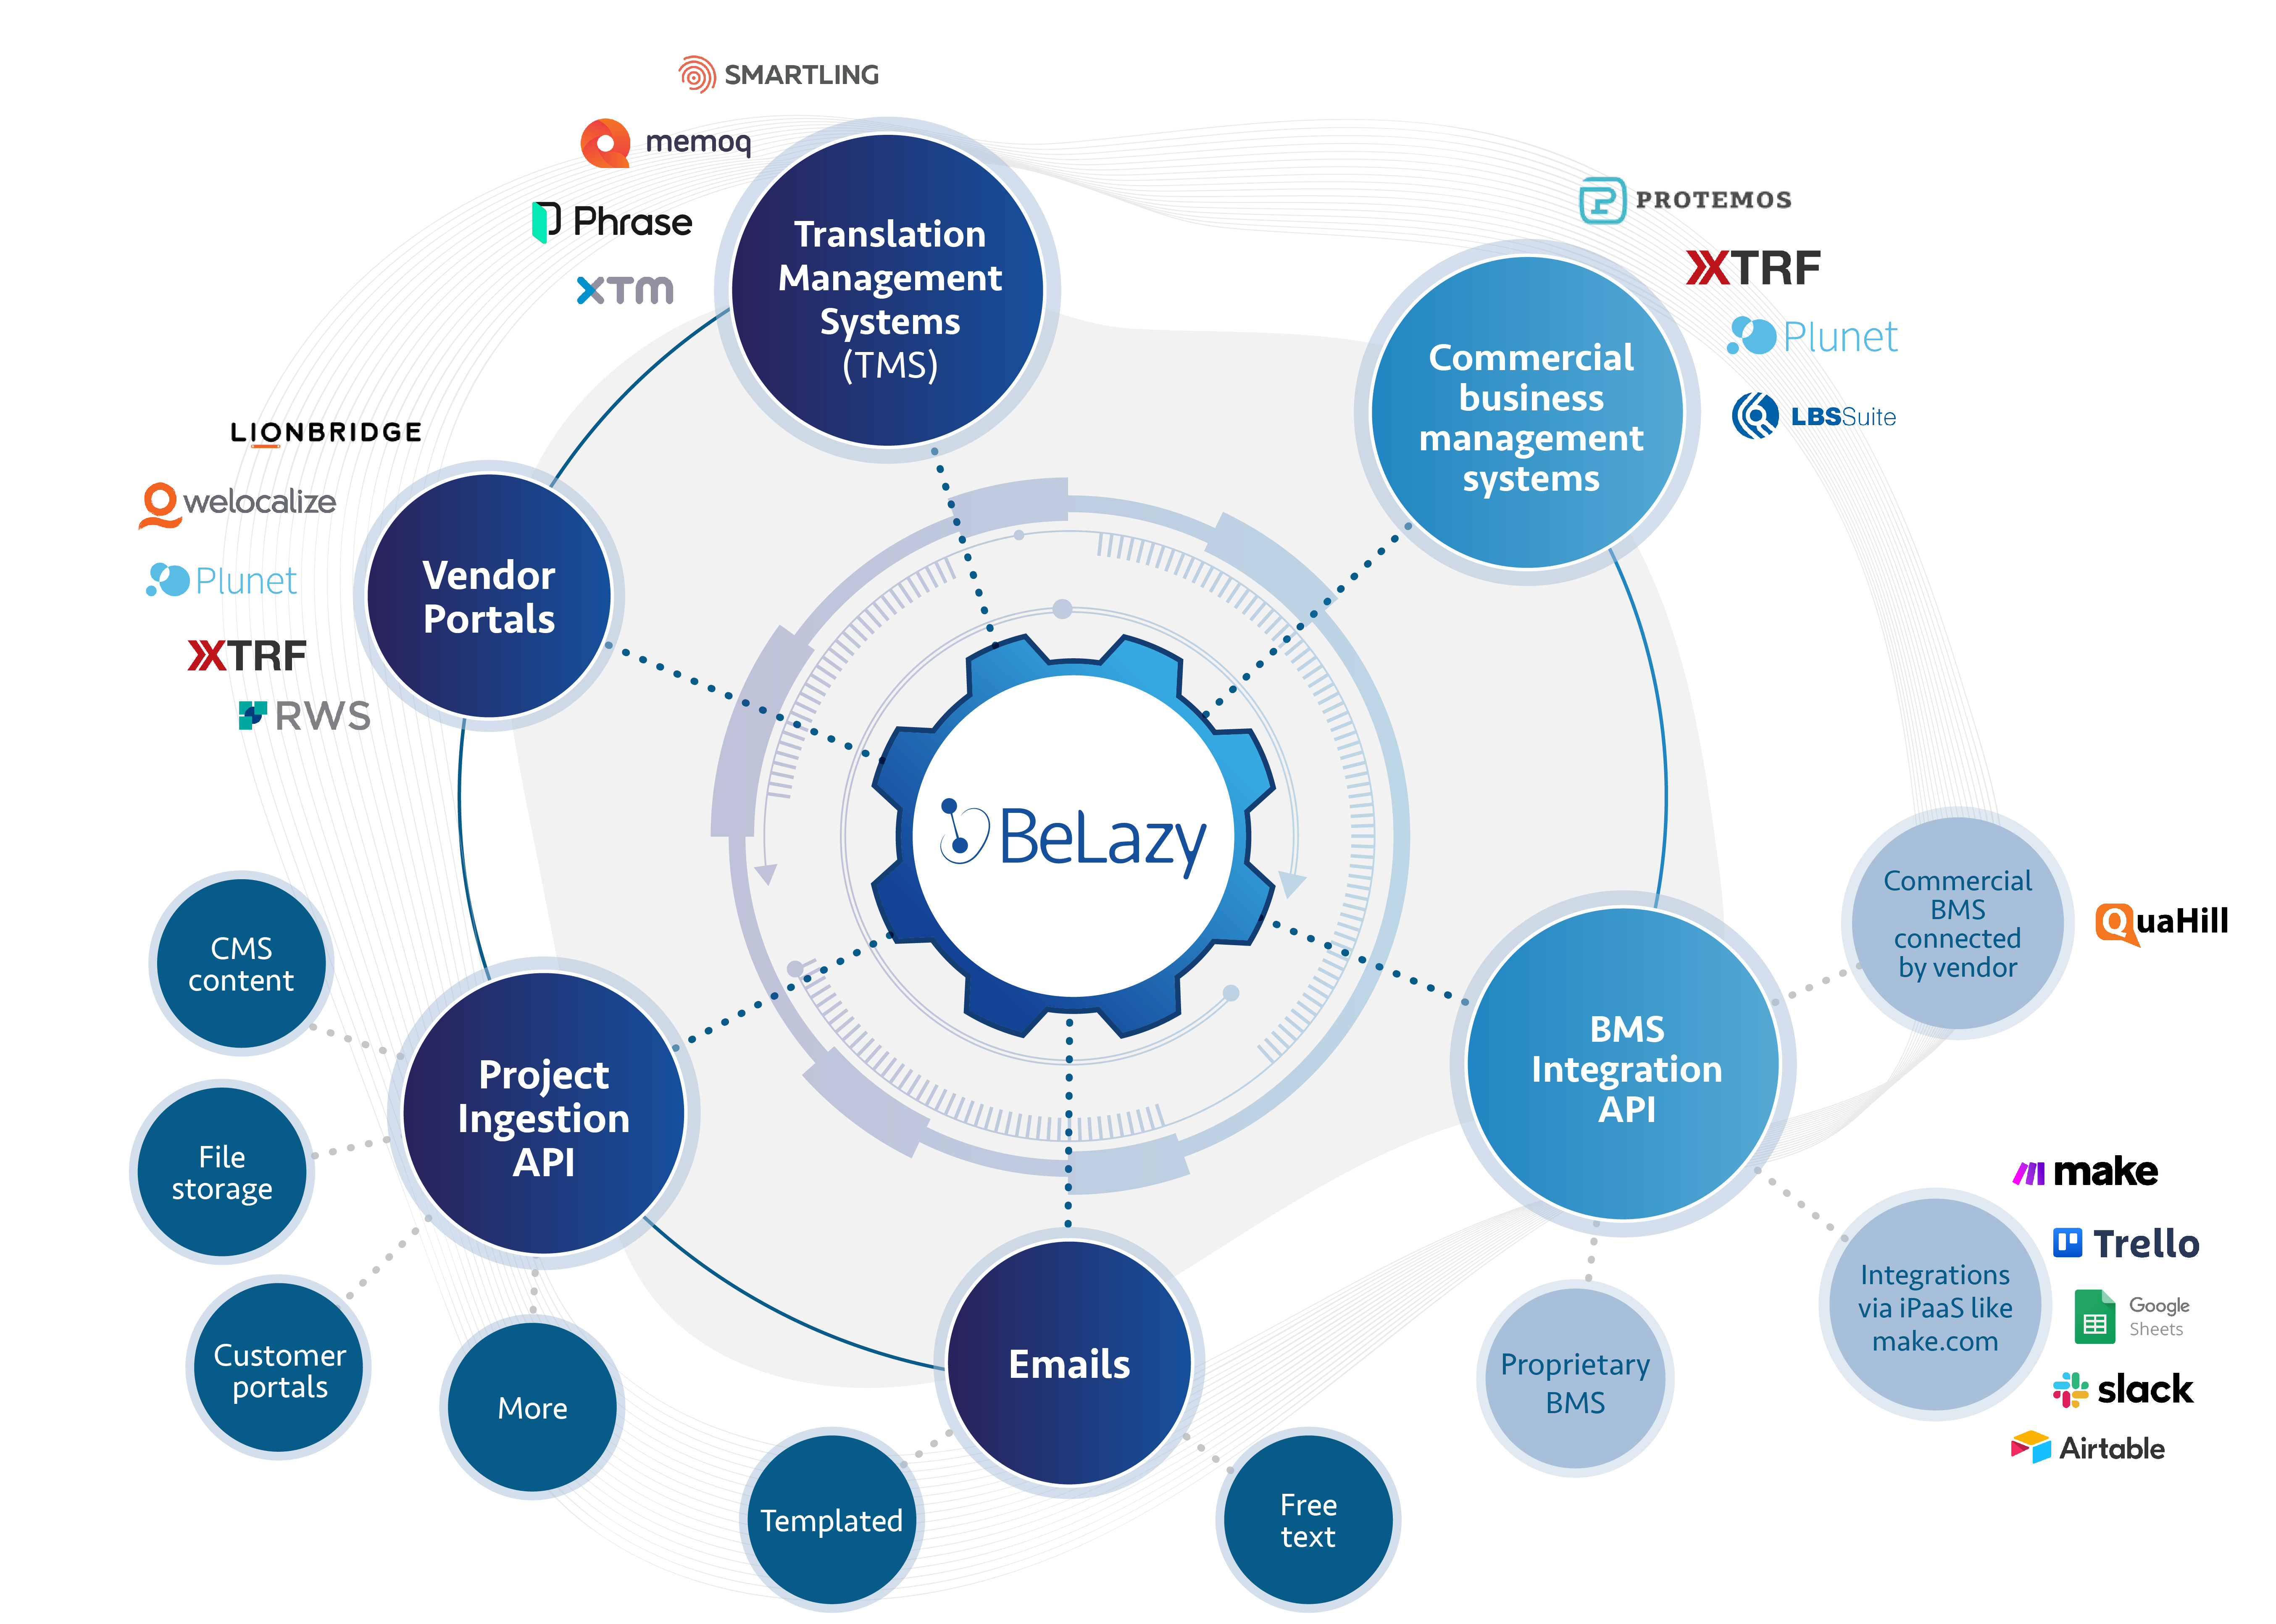 BeLazy integration map and APIs